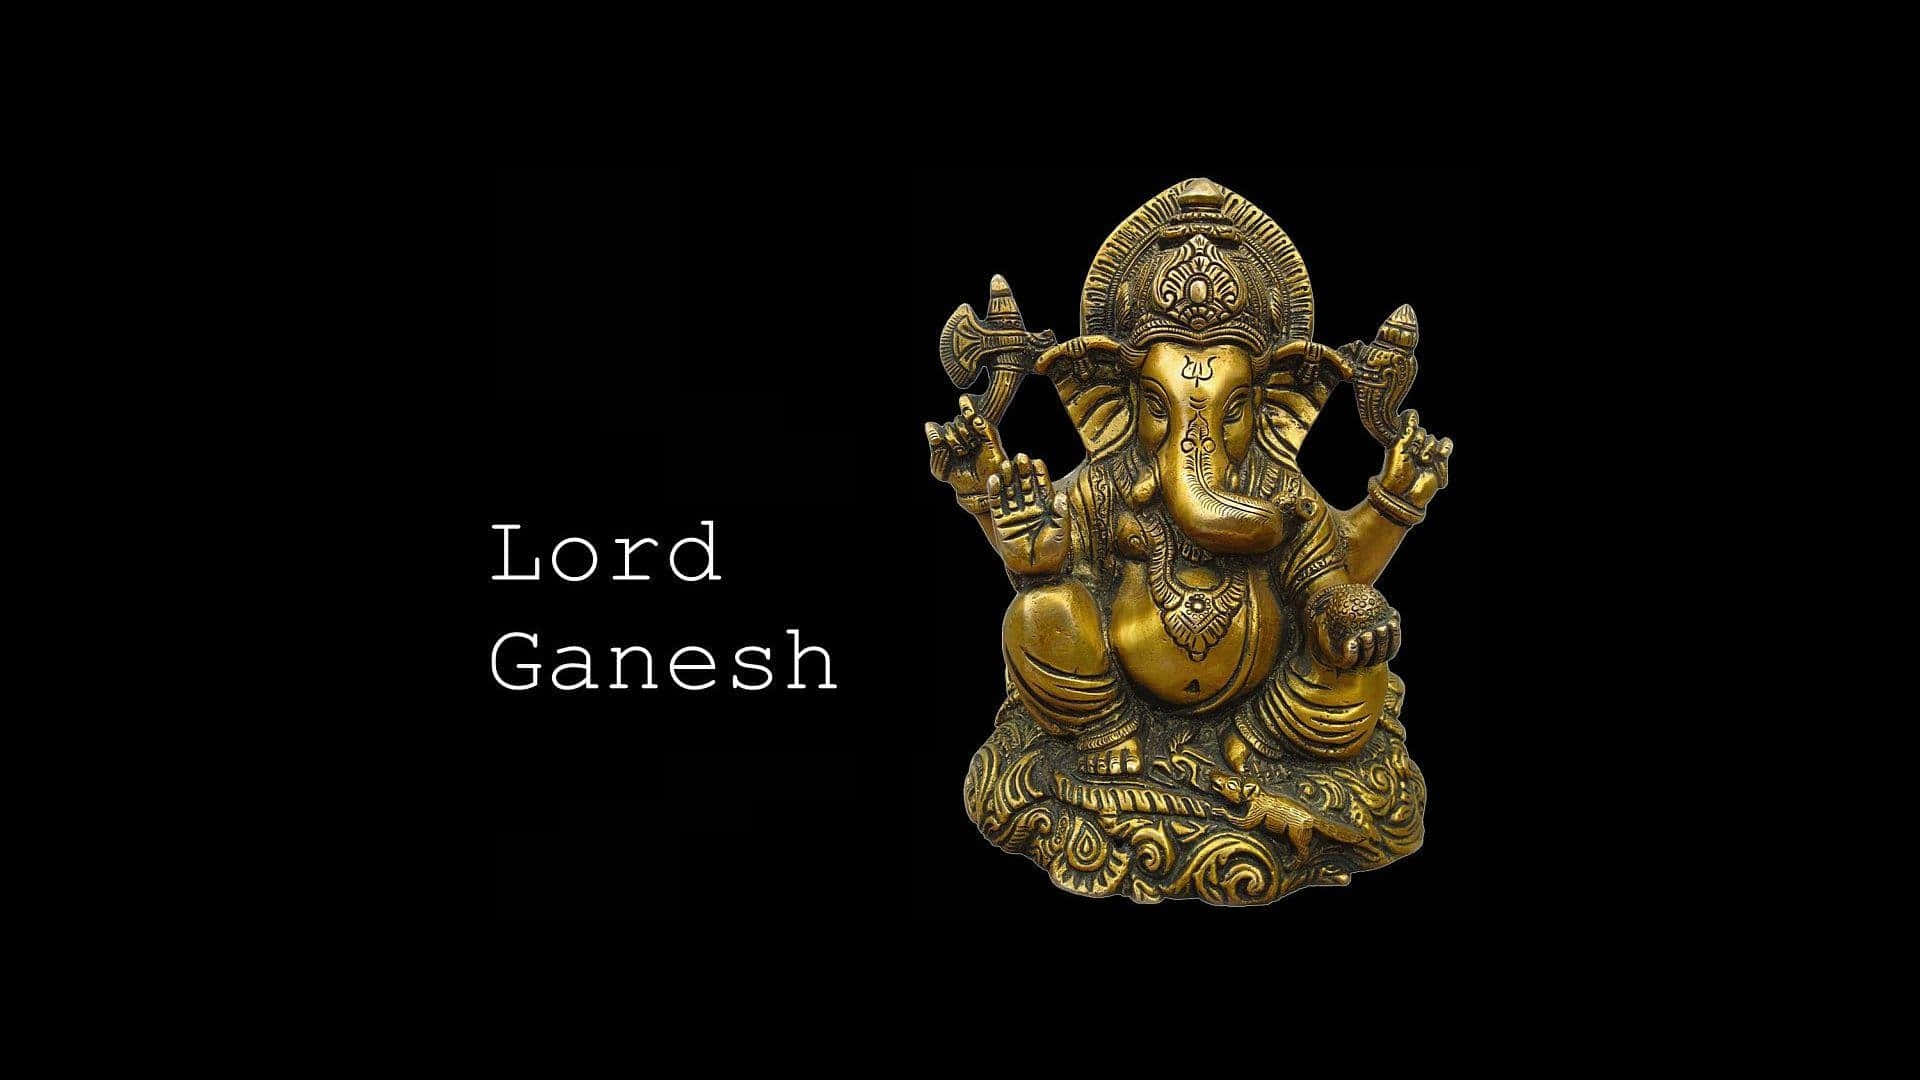 Imagendel Señor Ganpati Bappa, El Señor Ganesh.